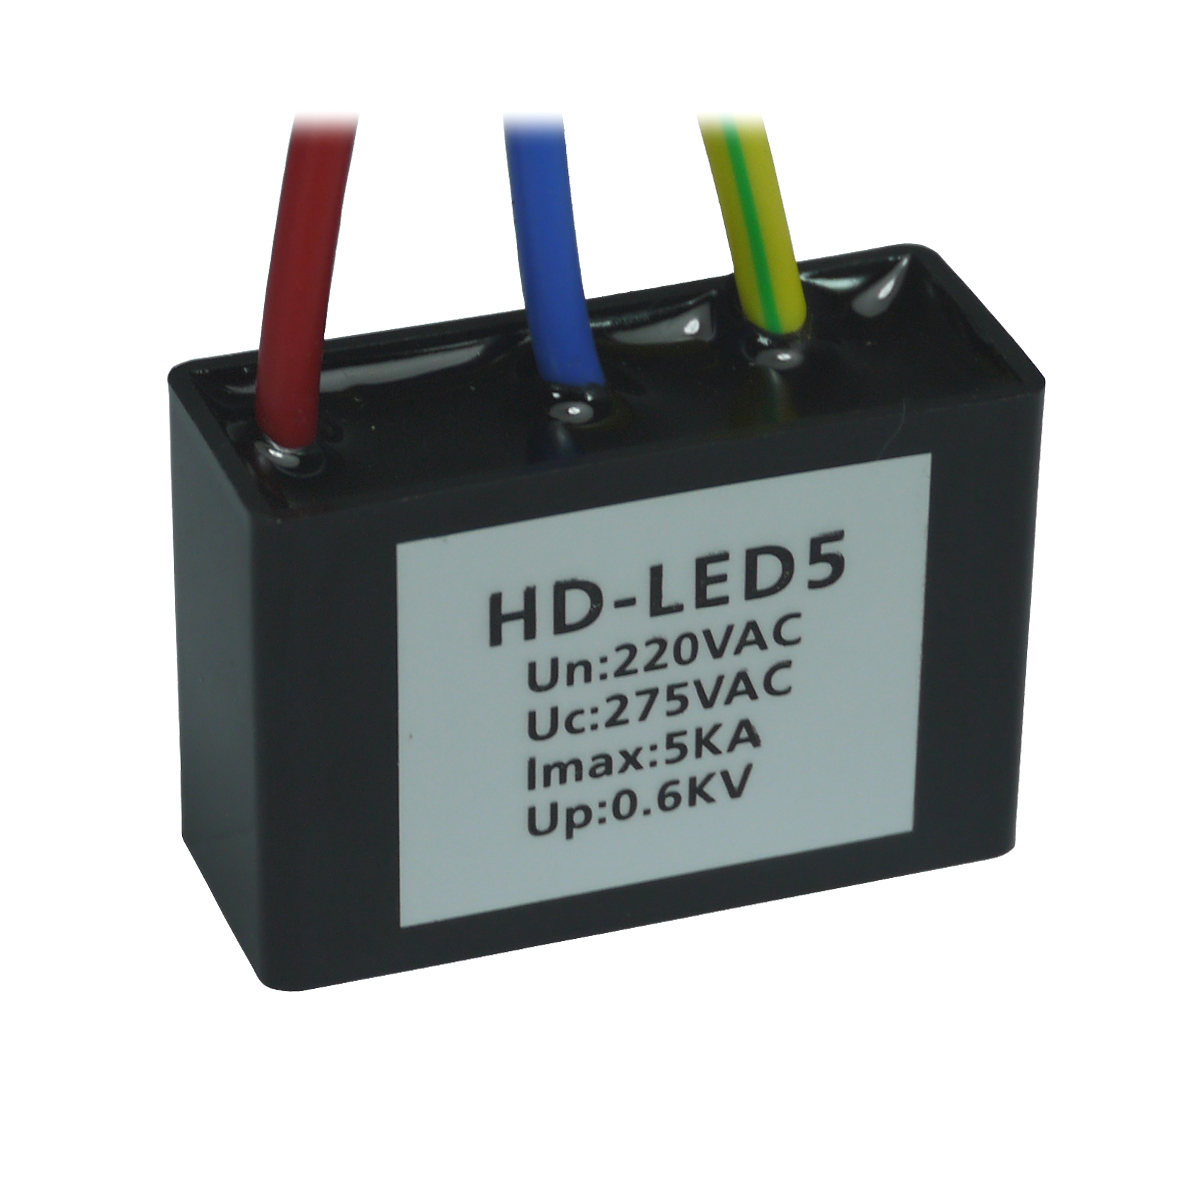 LED street light lightning arrester HD-LED5